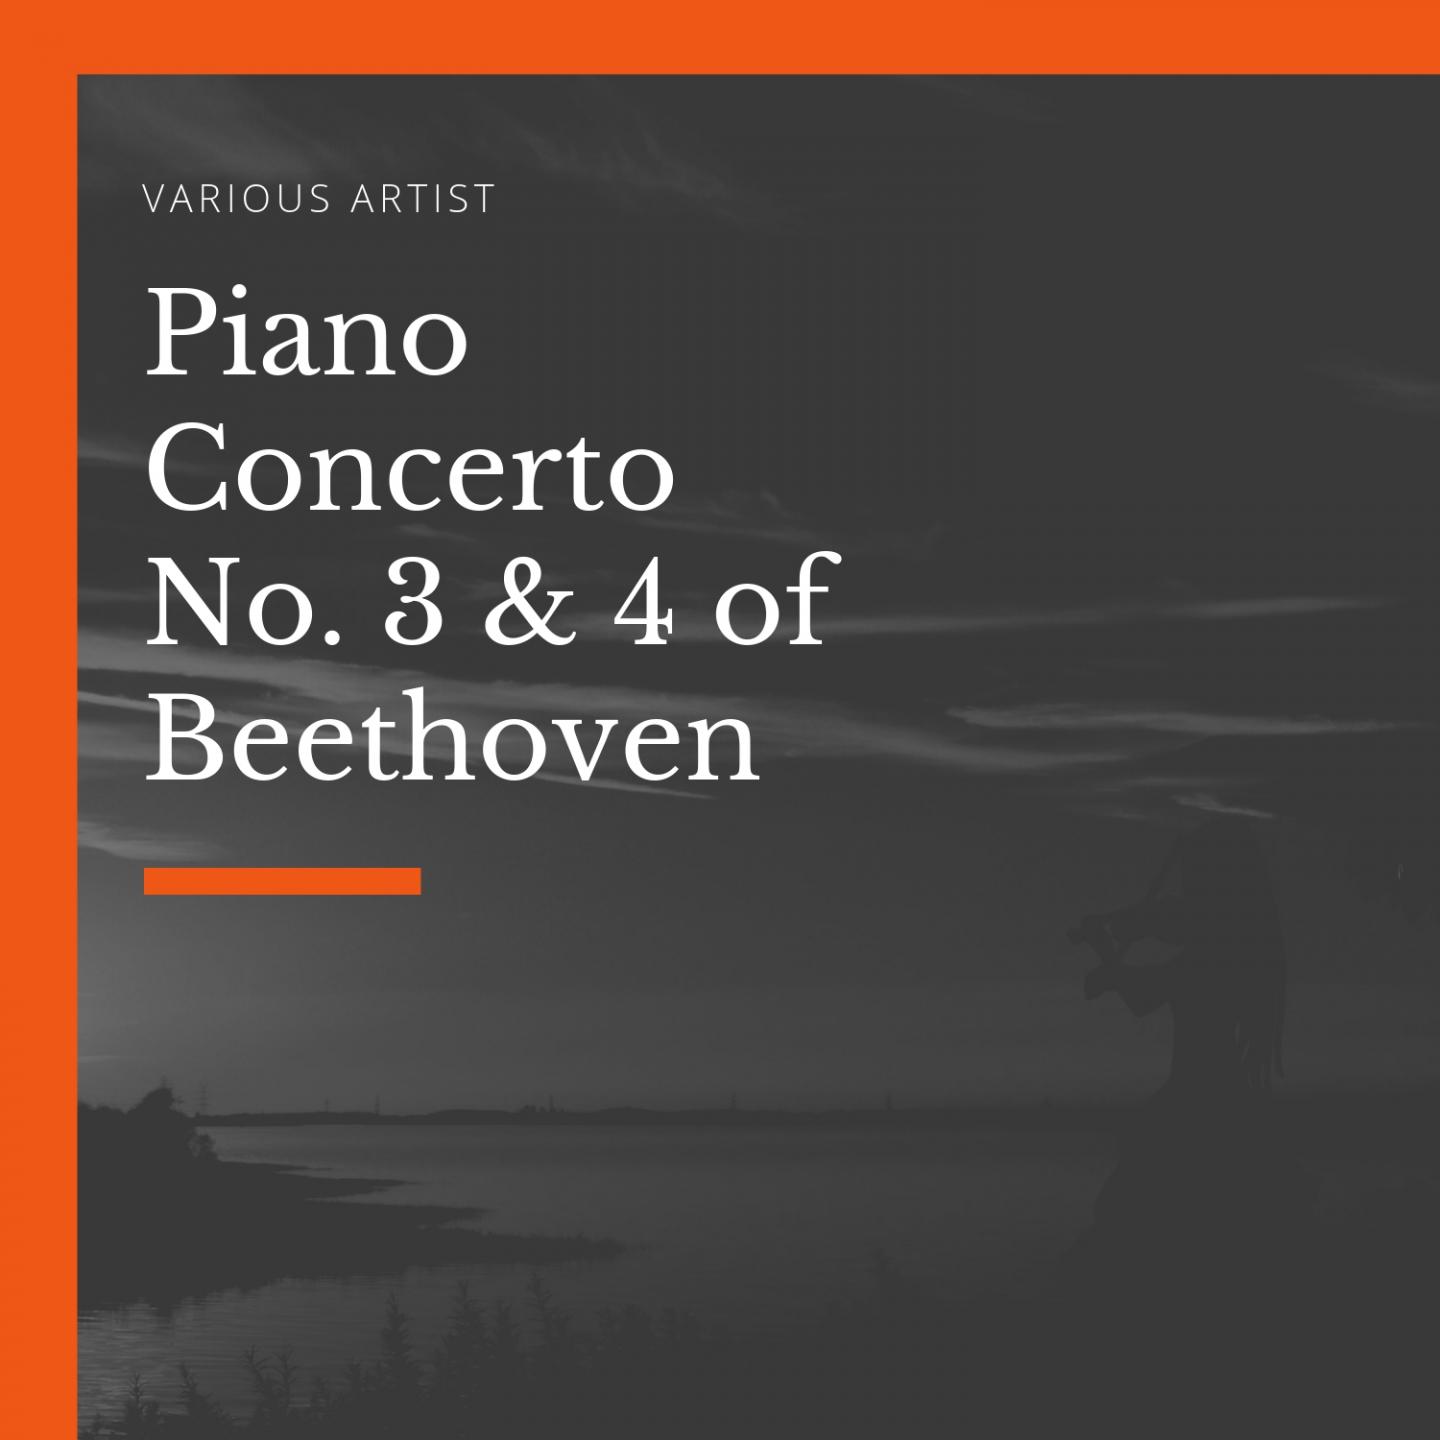 Piano Concerto No. 3 & 4 of Beethoven